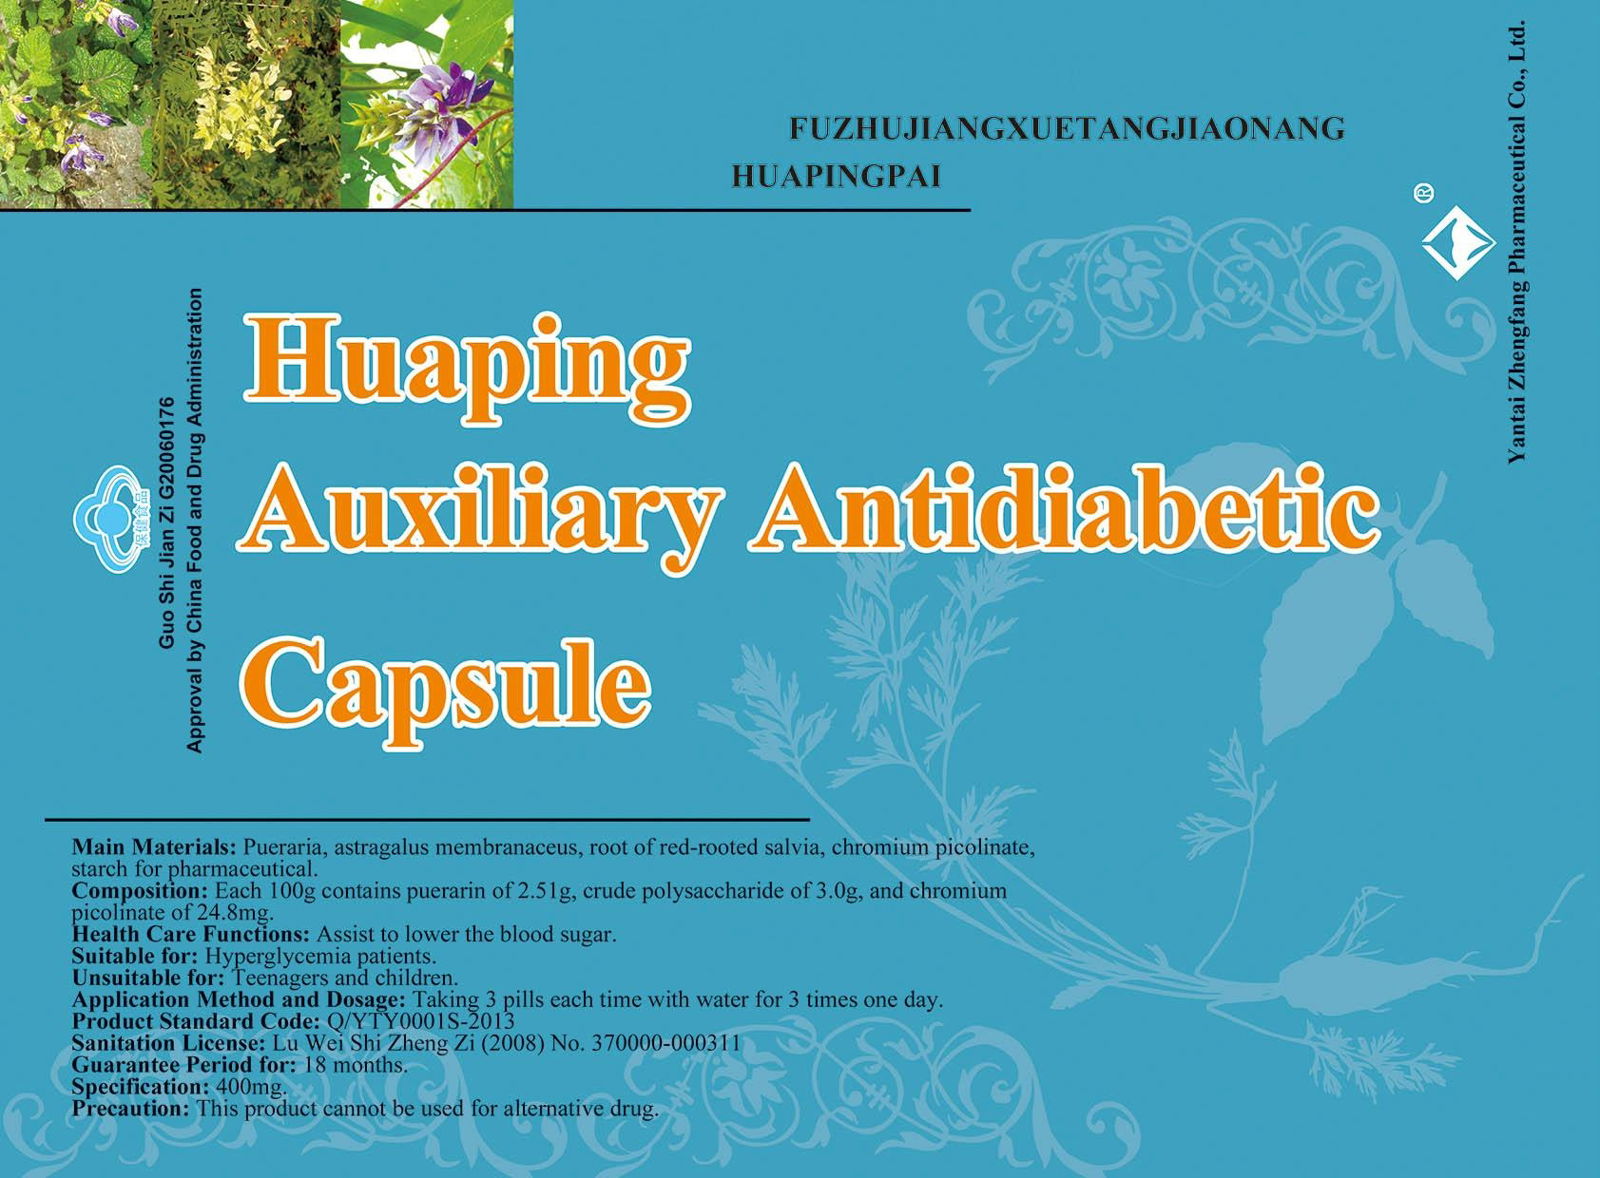 Auxiliary Antidiacetic Capsule